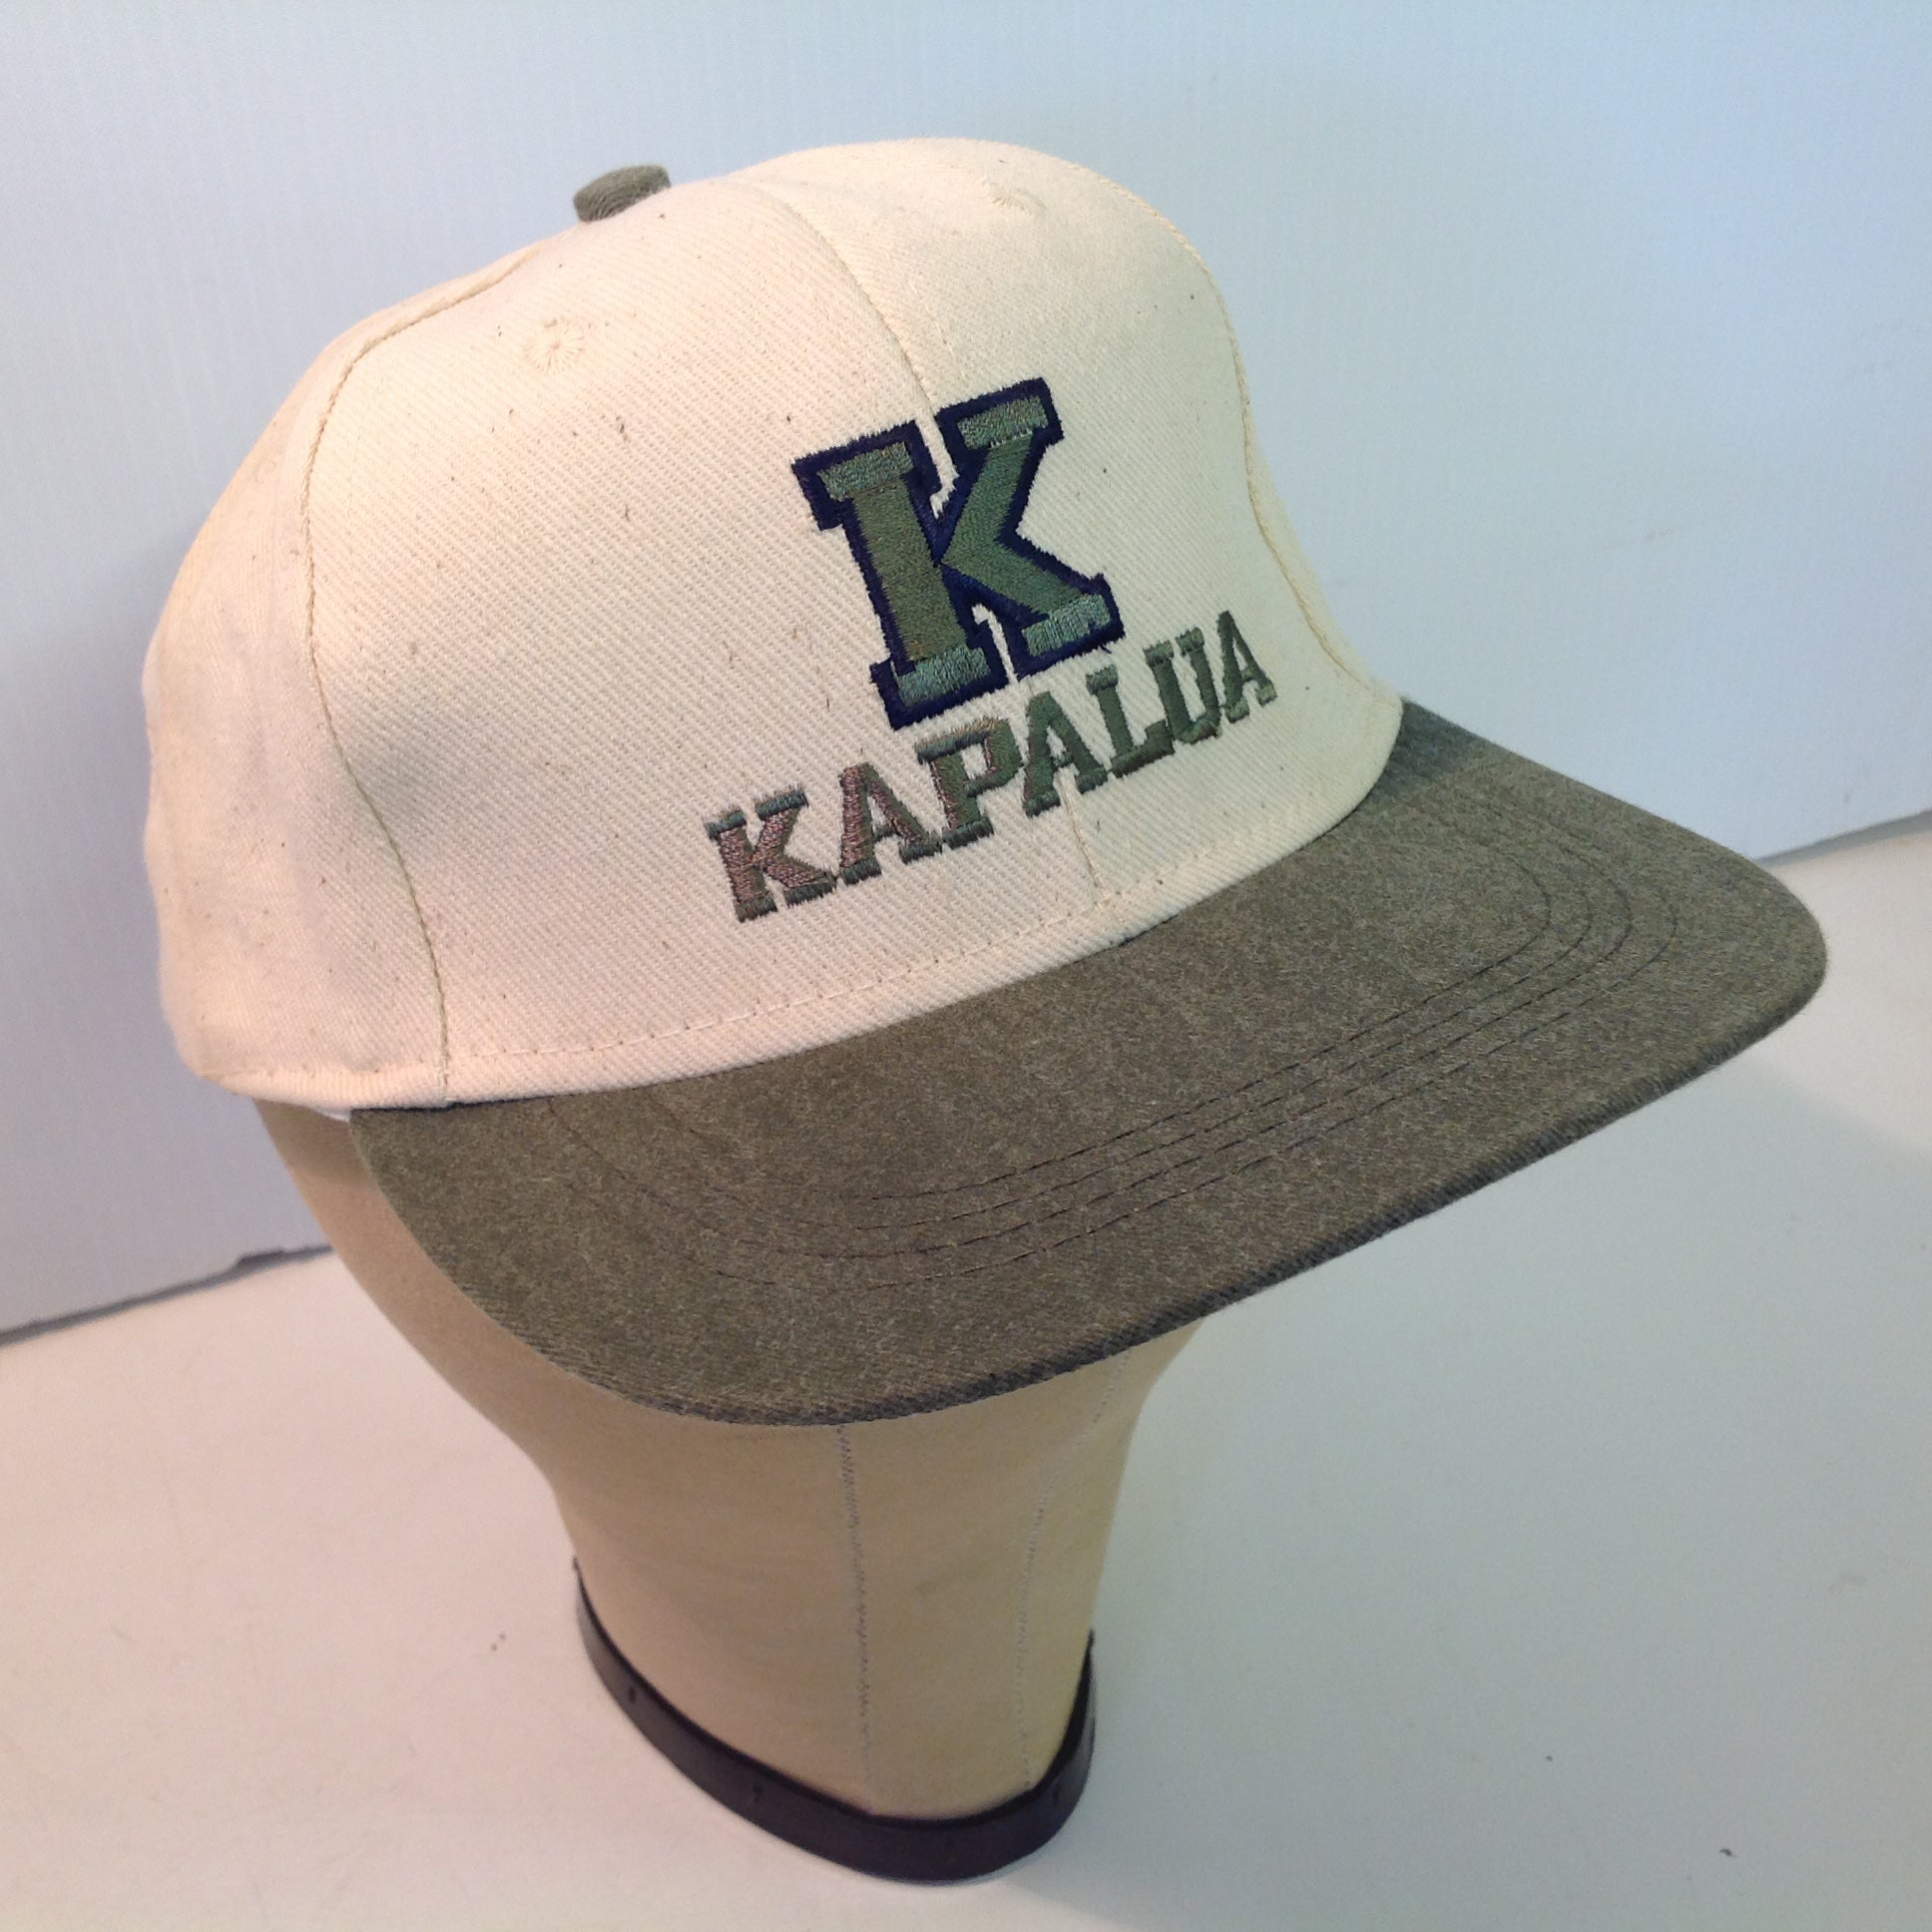 Vintage Imperial Headwear Kapalua Plantation Golf Course Hawaii Souvenir Cream and Olive Green Baseball Cap